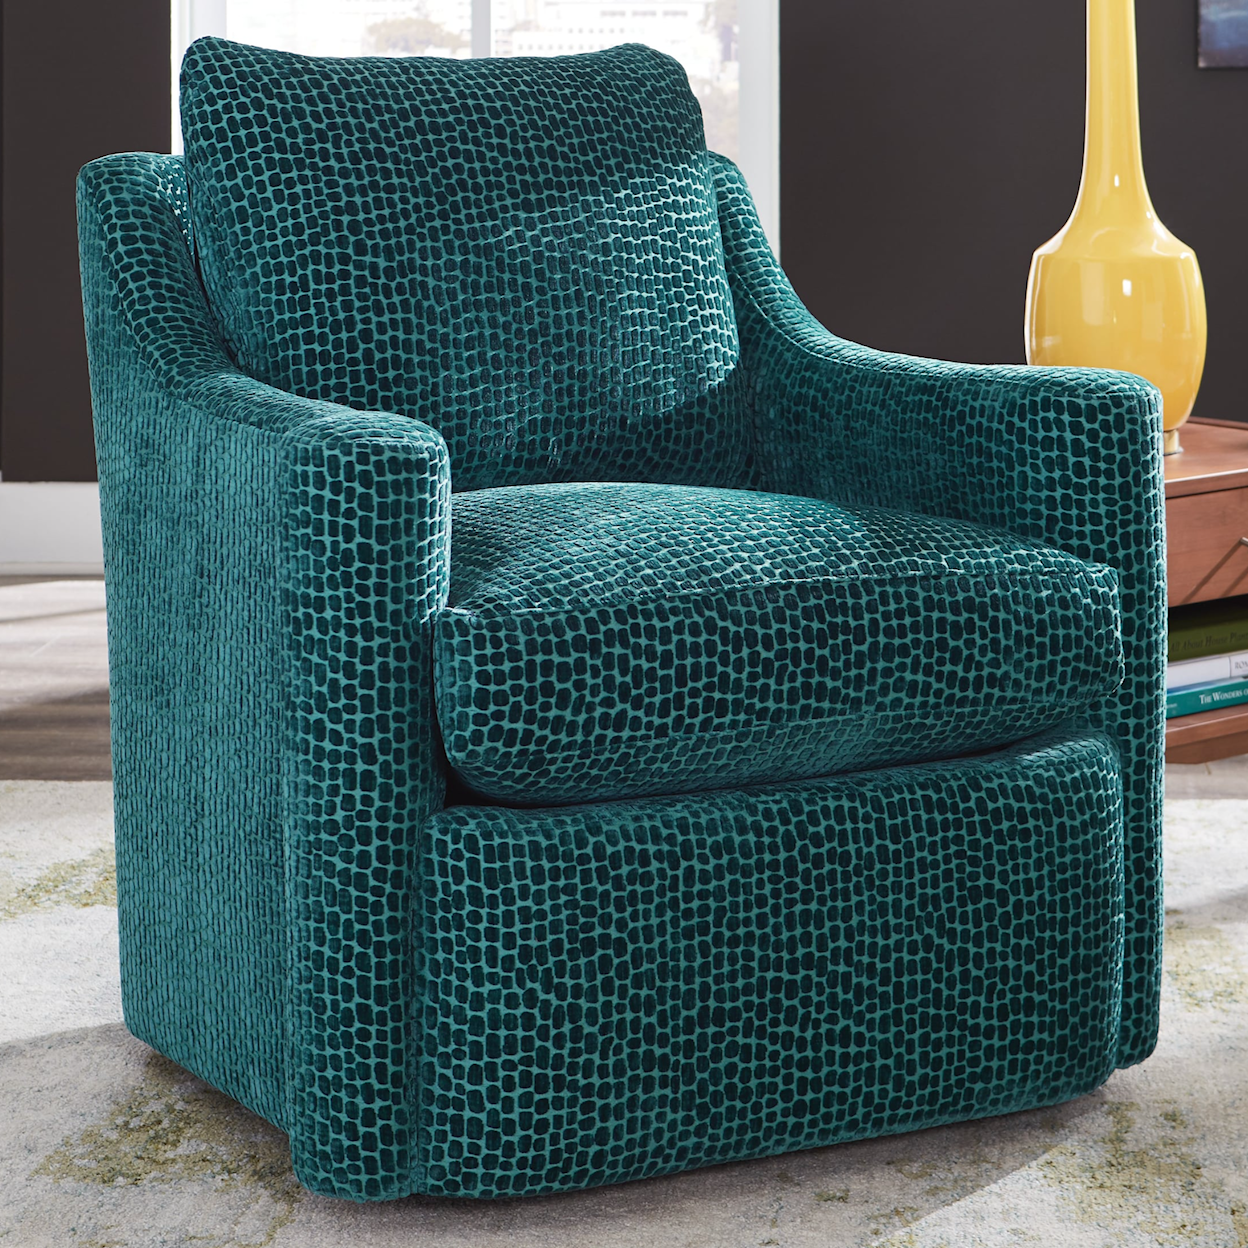 Hickory Craft 031910BDSC Swivel Chair